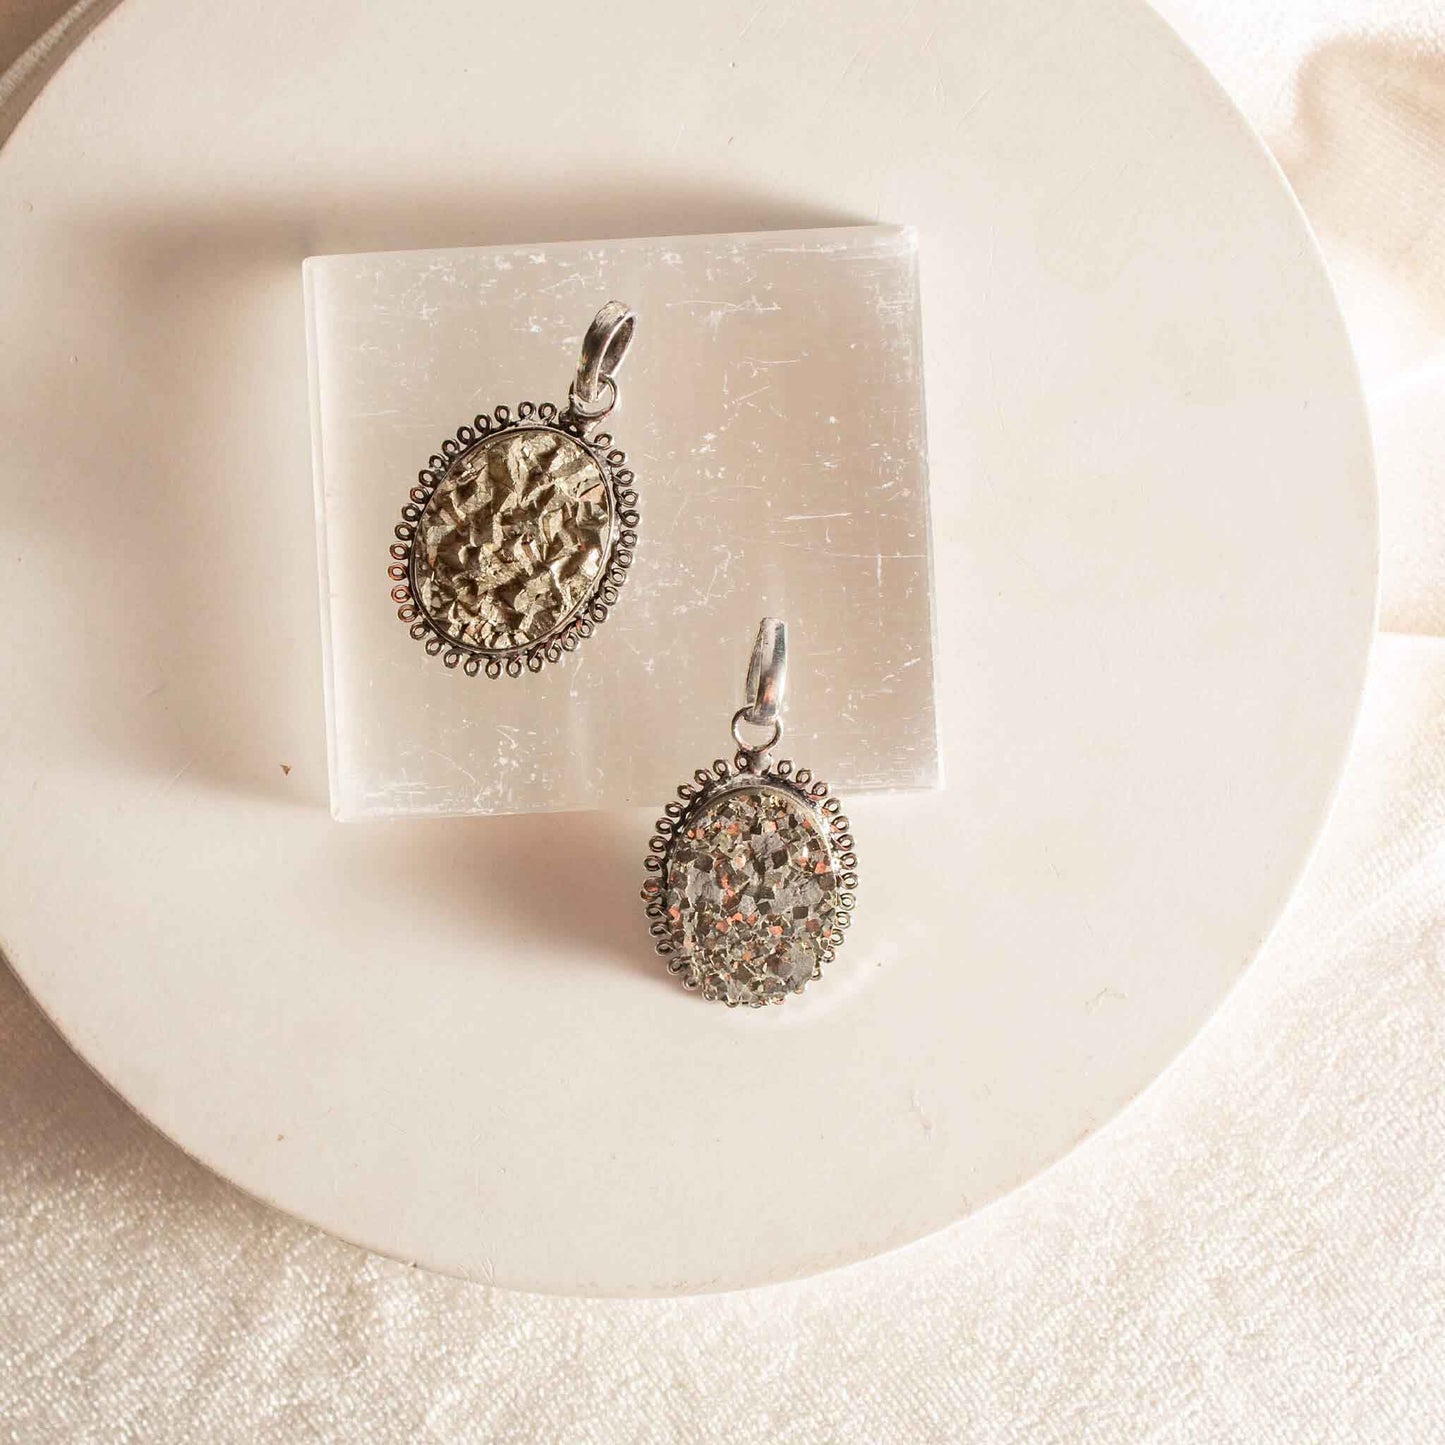 pyrite pendant for women